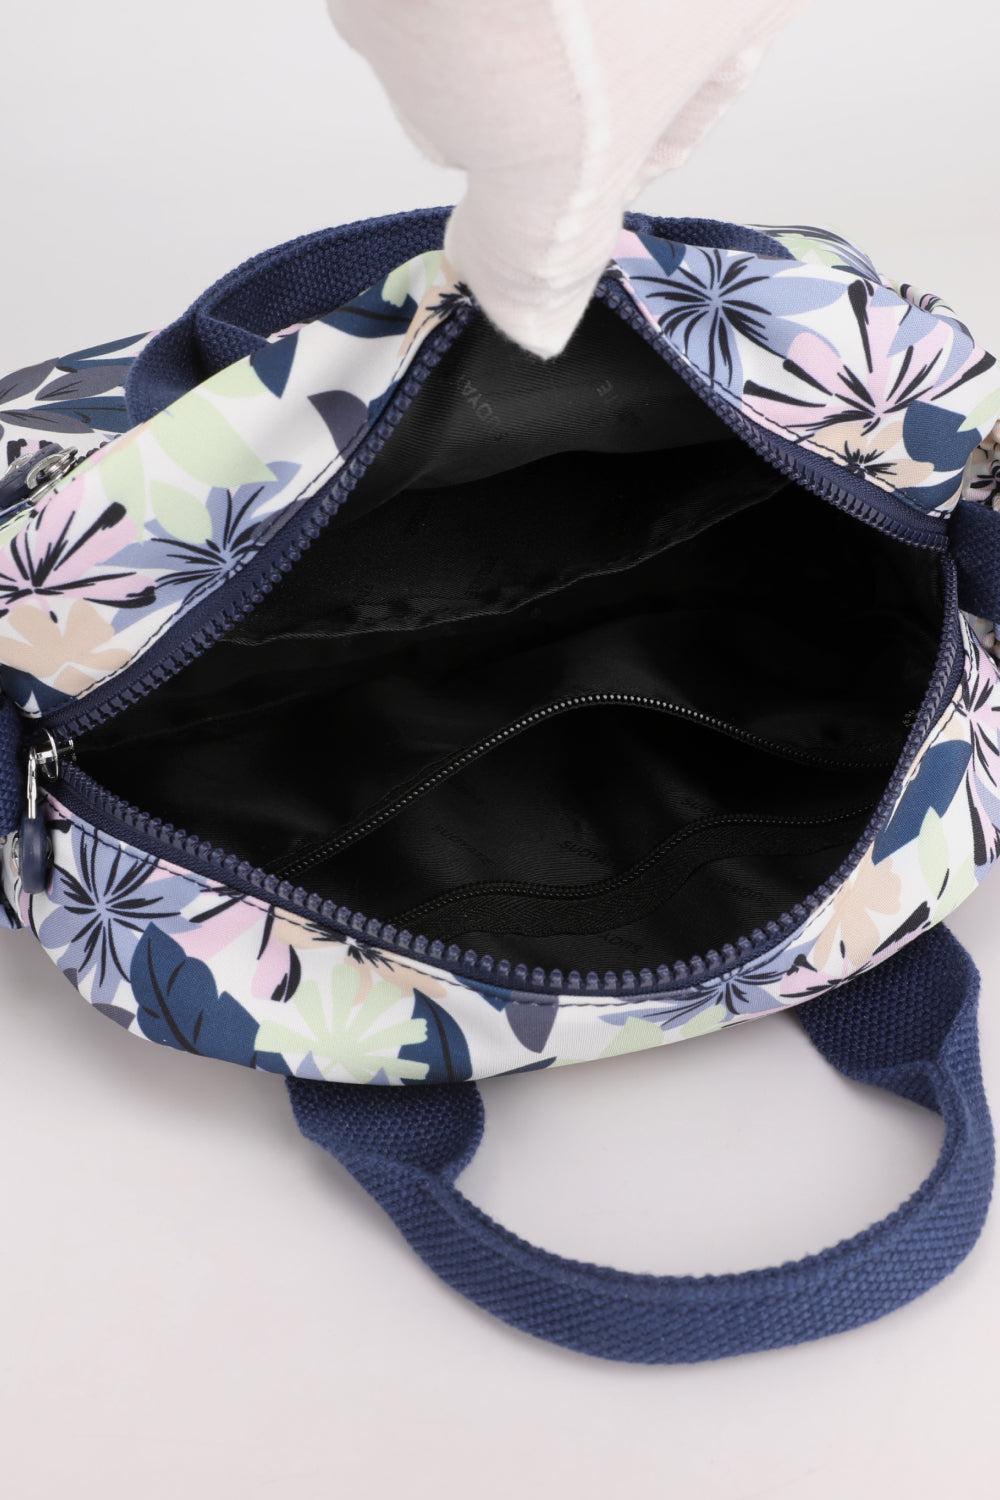 Floral Nylon Handbag BLUE ZONE PLANET